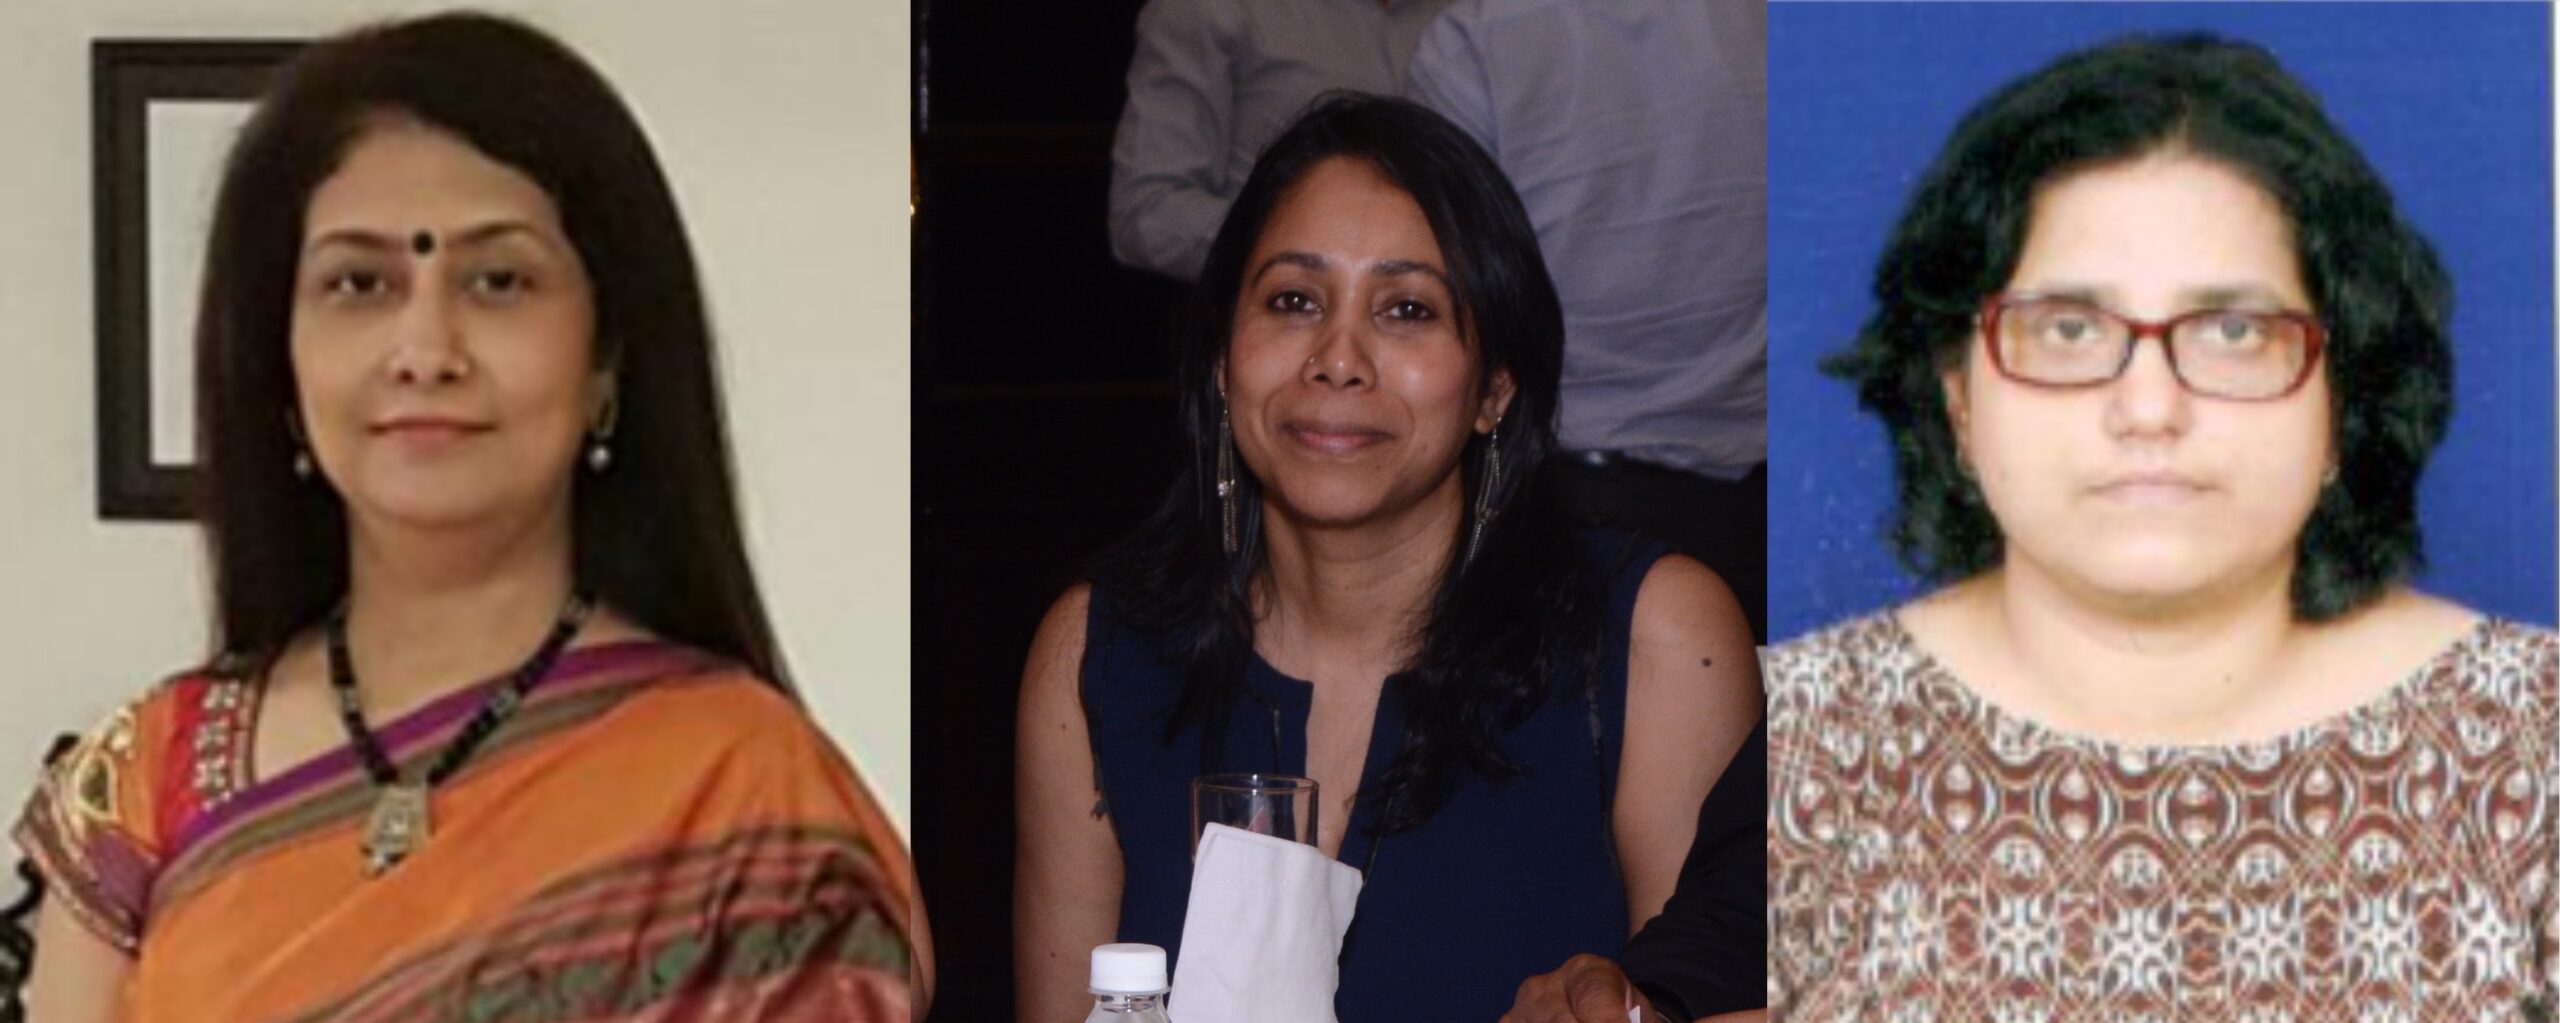 MRSS India | 3 SENIOR WOMEN RESEARCHERS | Dr. Mridula Savitri Mishra | Research Director, Social Research Practices, | Ms. Geeta Sachar | Senior Vice President, MRSS India (Head South Region) | Ms. Ruma Sengupta | Senior Vice President - Insights Success